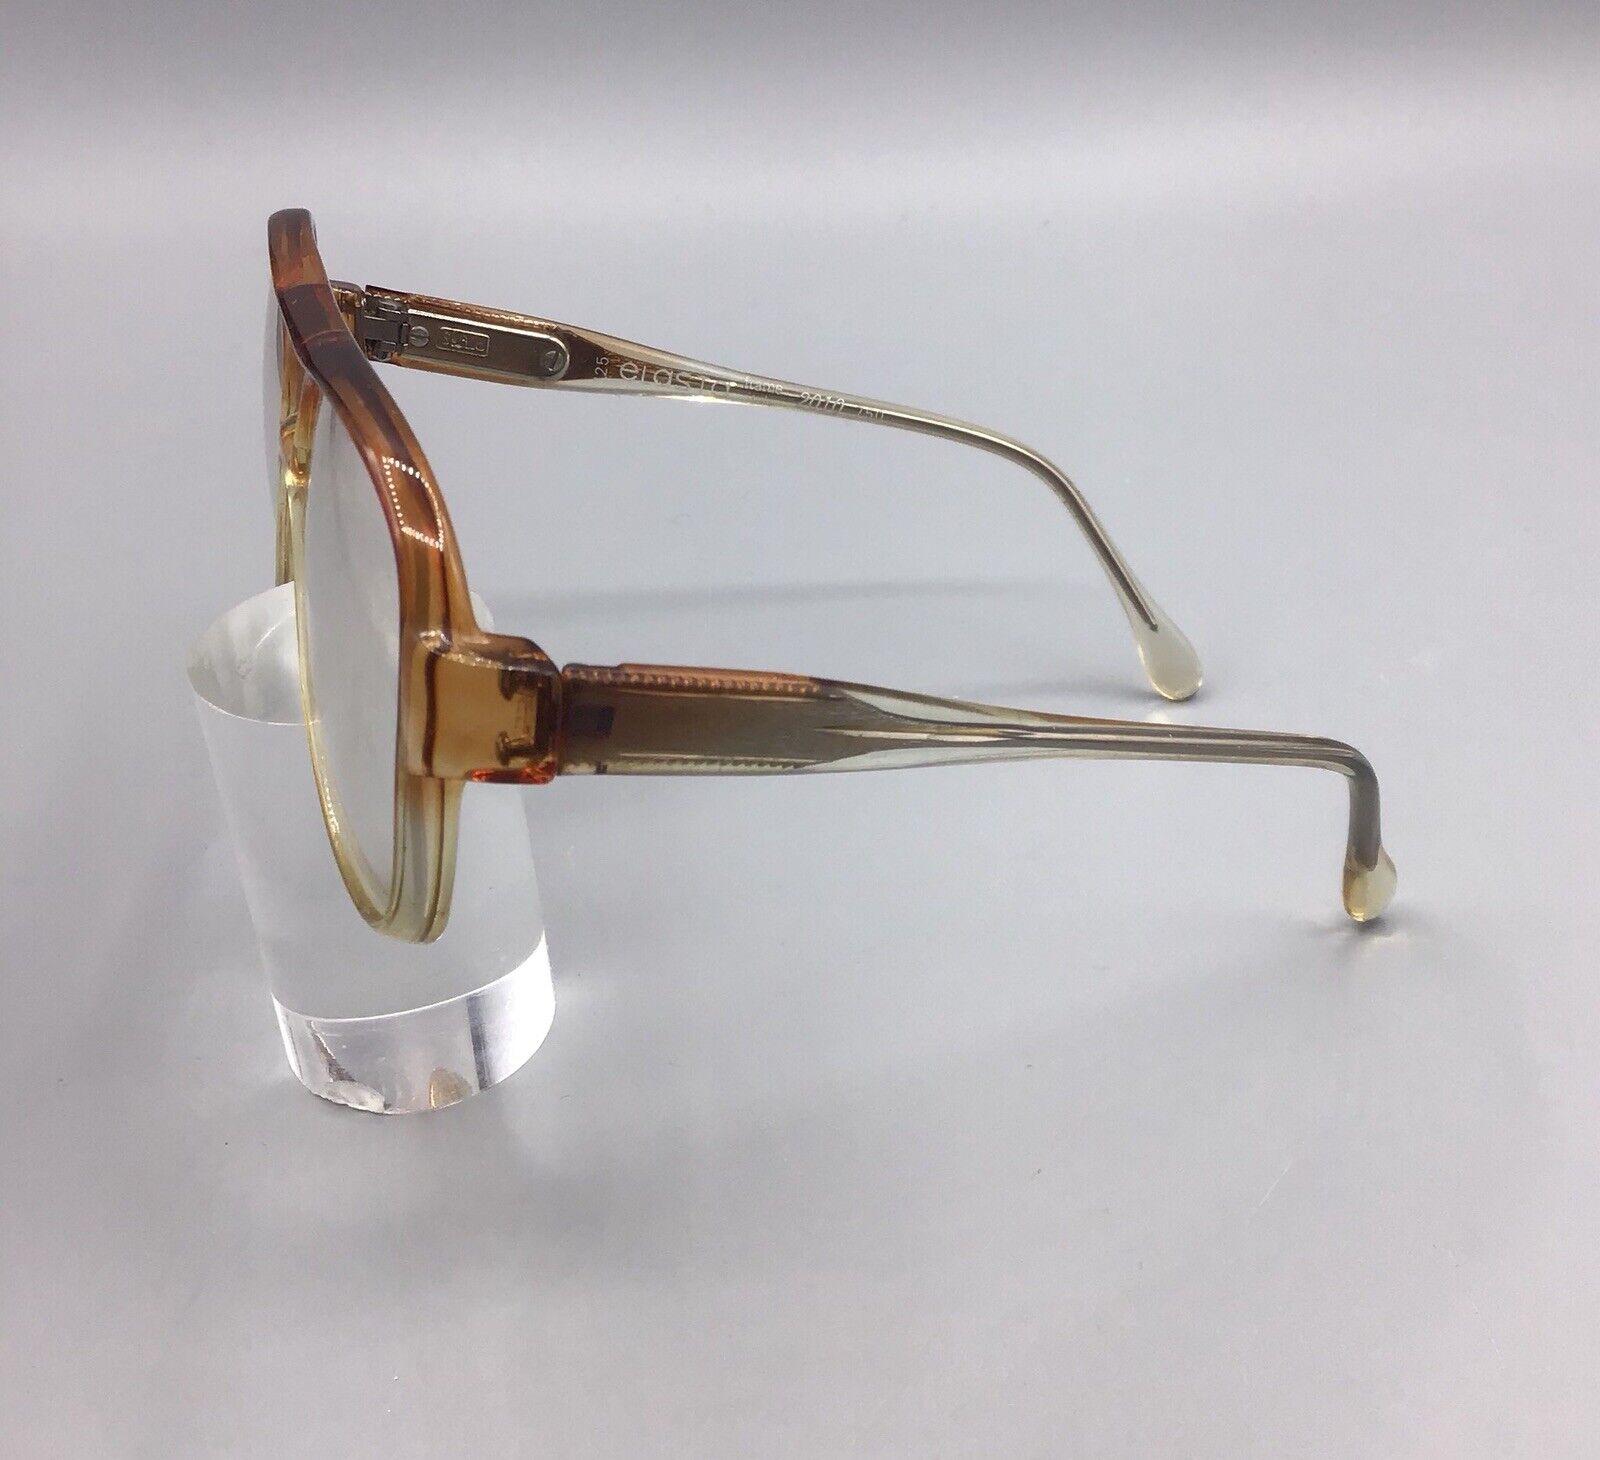 Safilo elasta eyewear occhiale vintage frame italy 2010 750 brillen lunettes